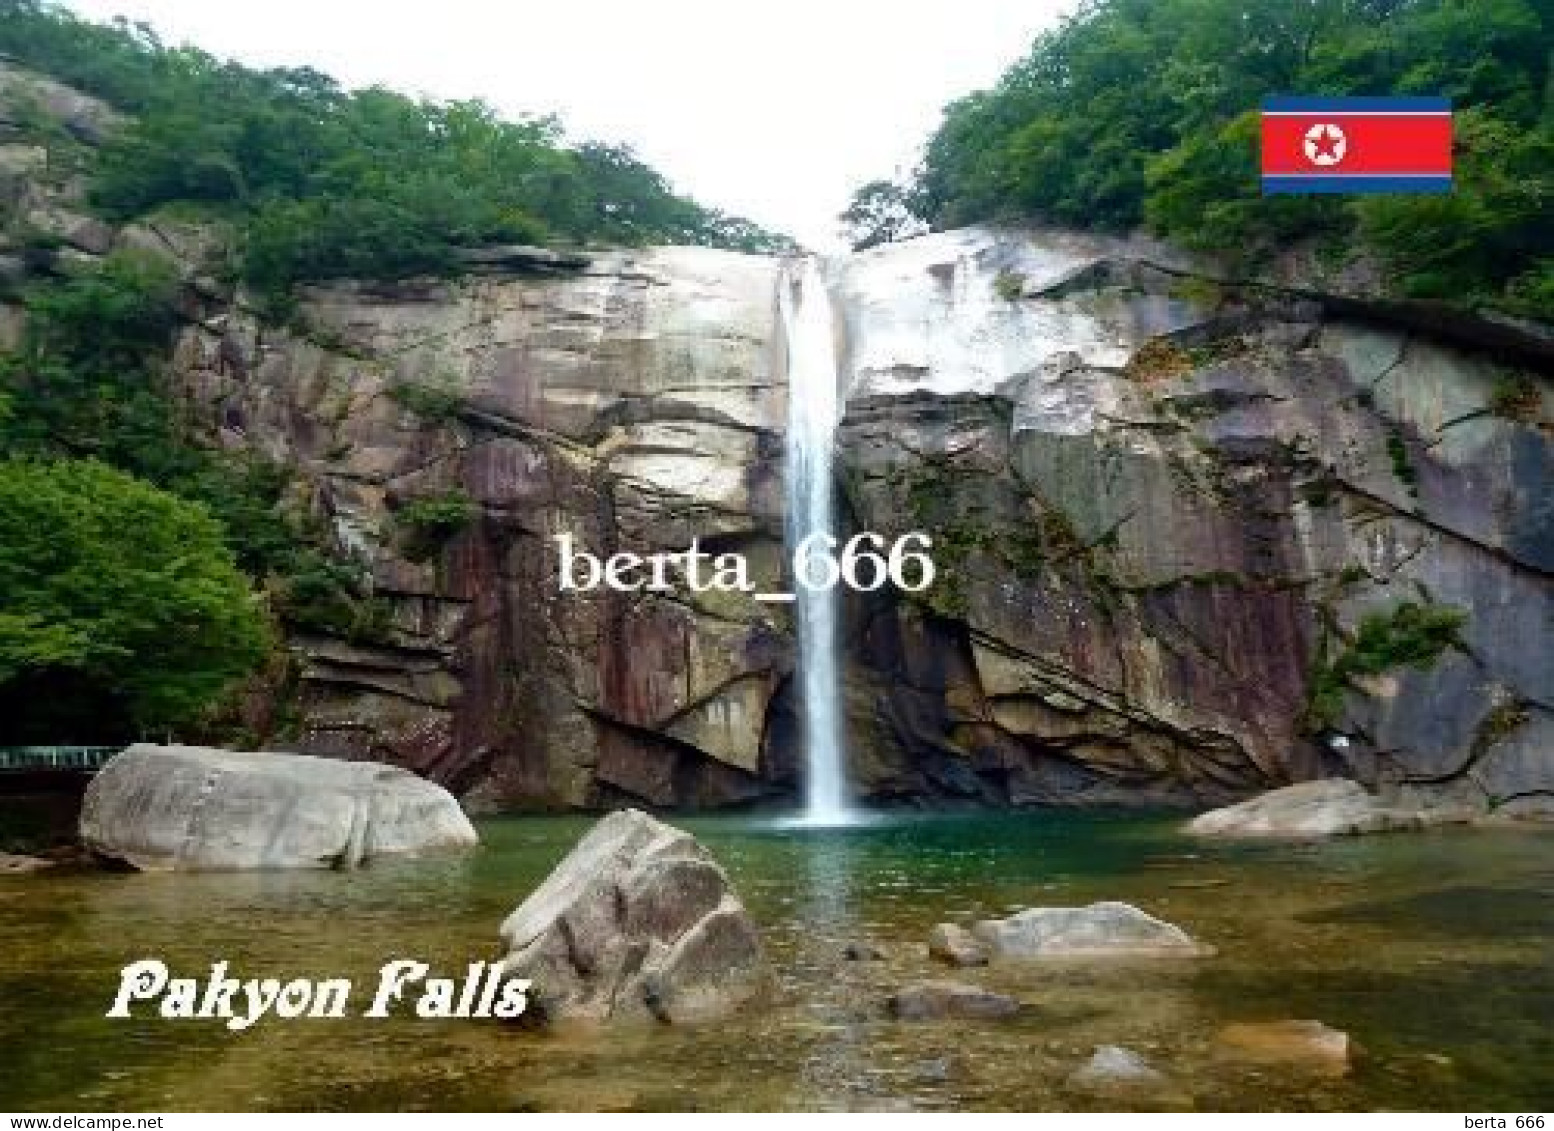 North Korea Pakyon Falls New Postcard - Korea (Nord)